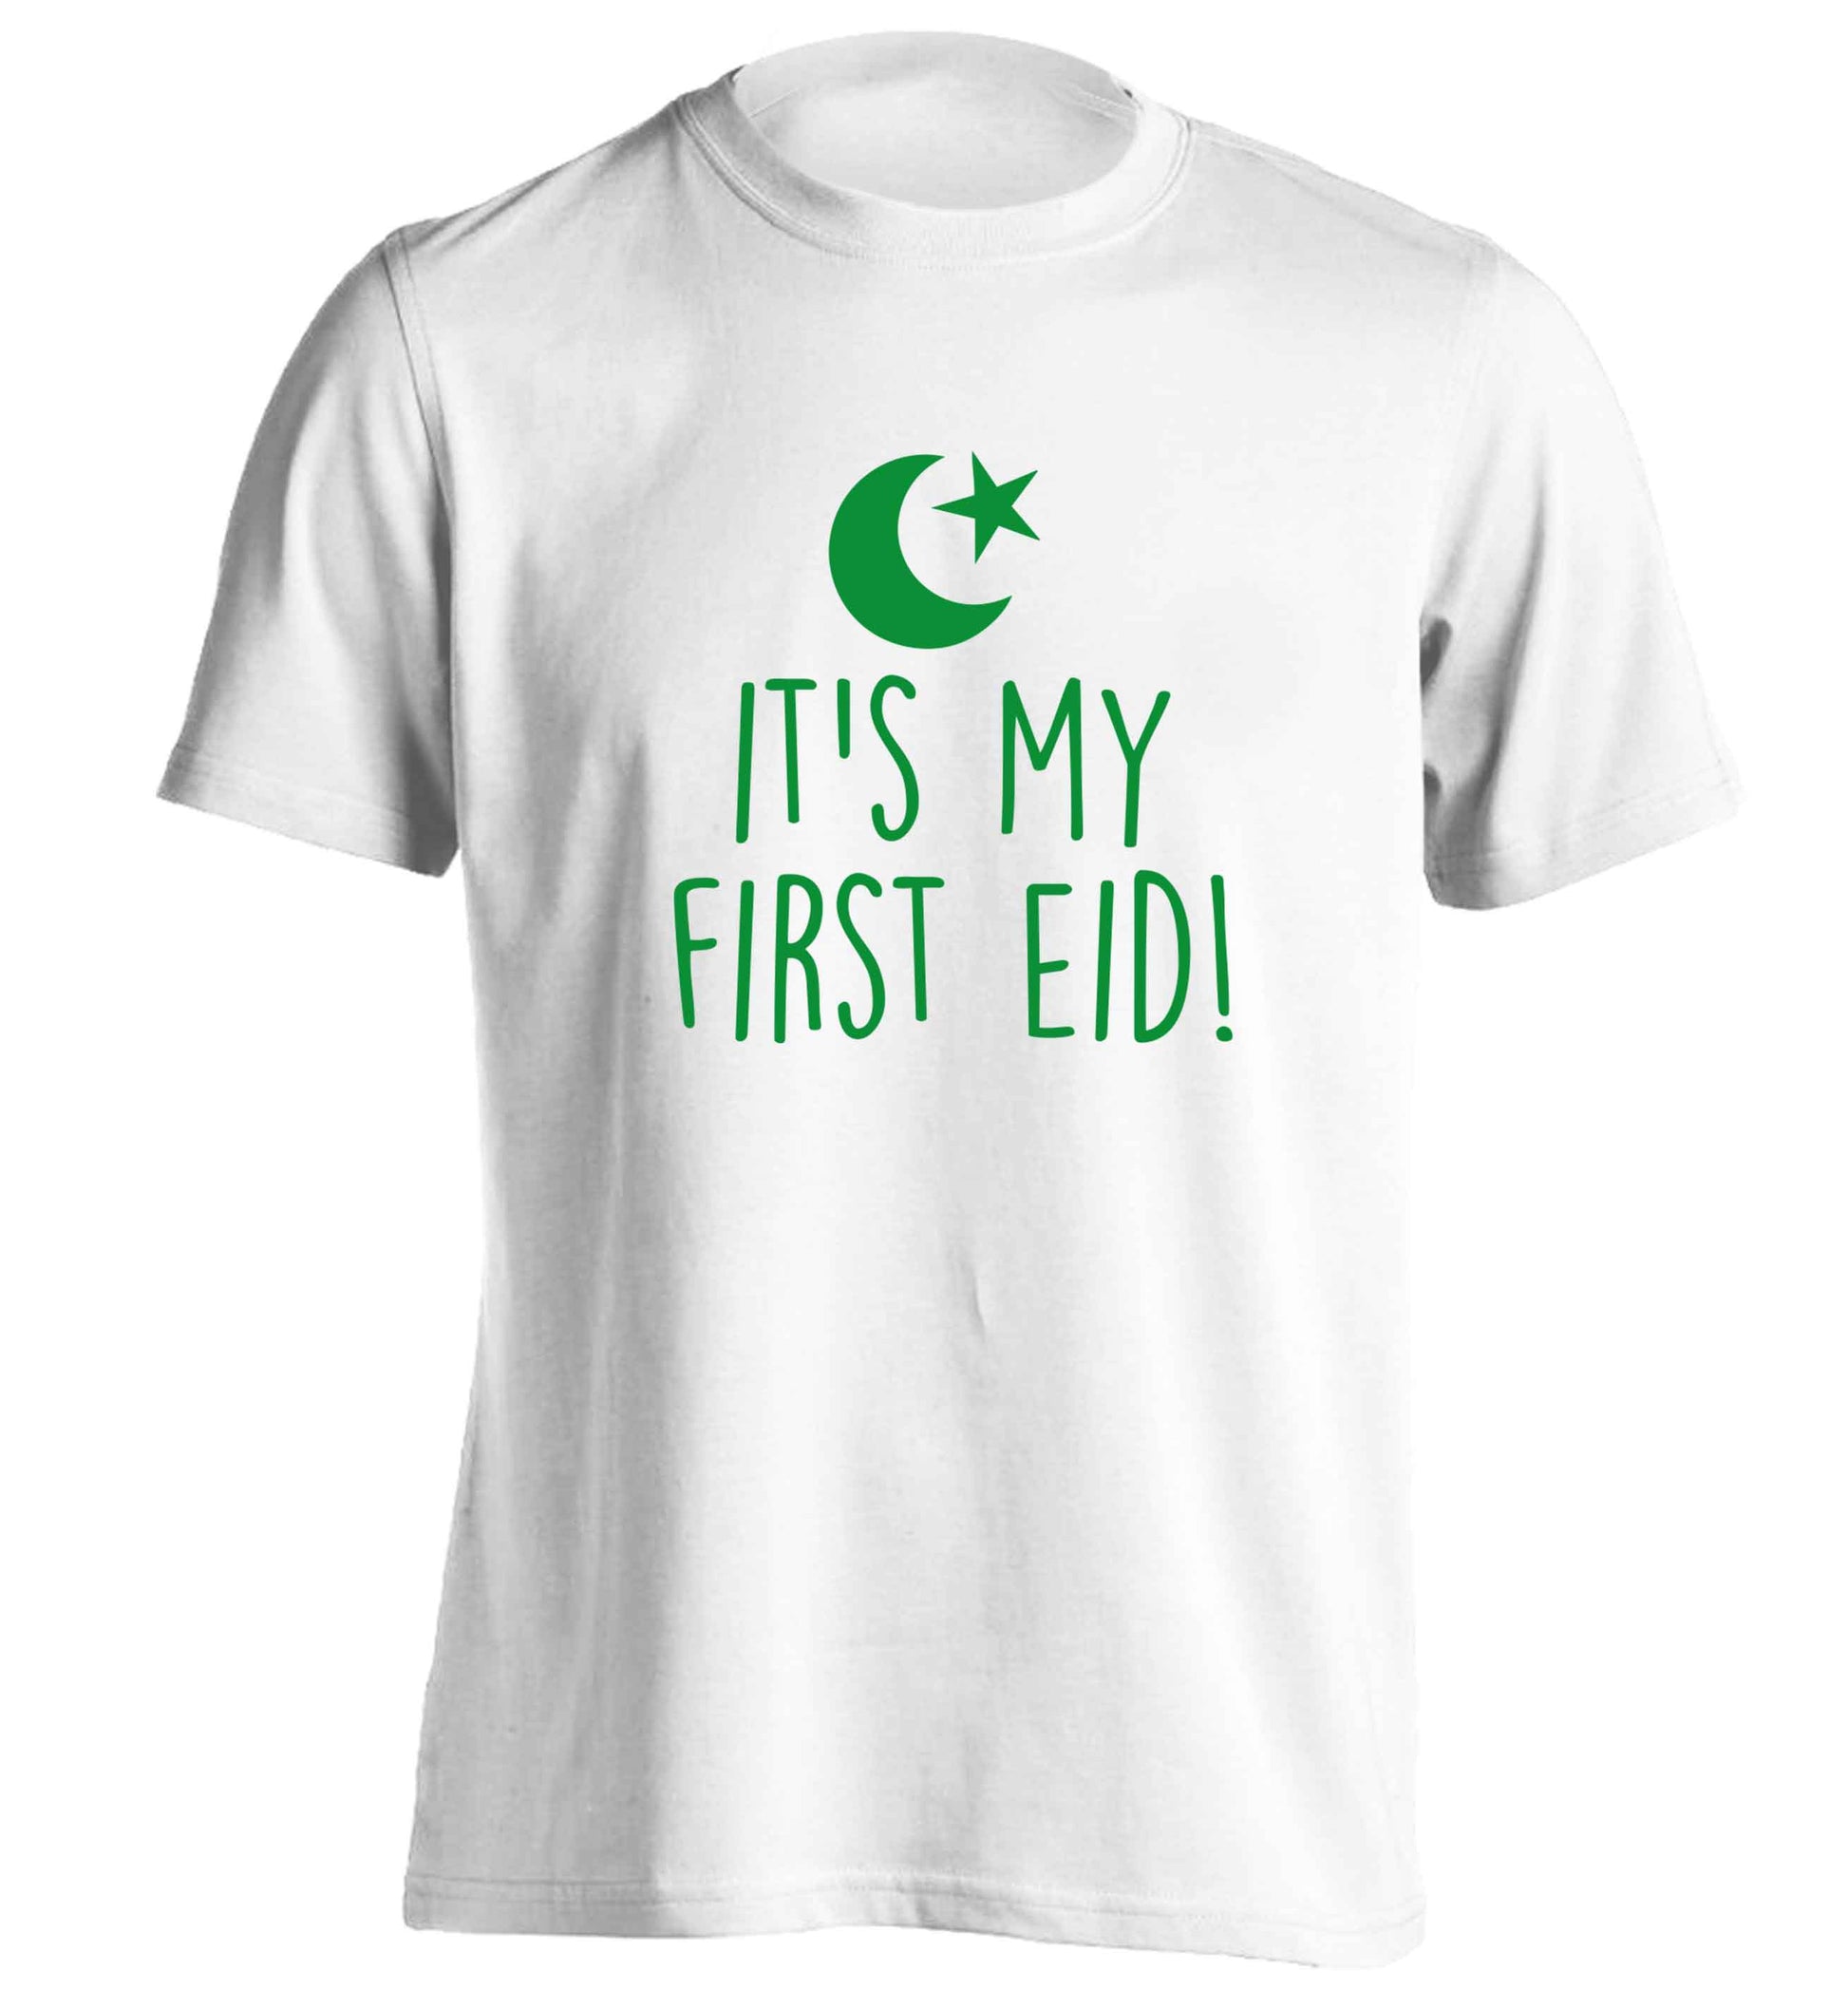 It's my first Eid adults unisex white Tshirt 2XL